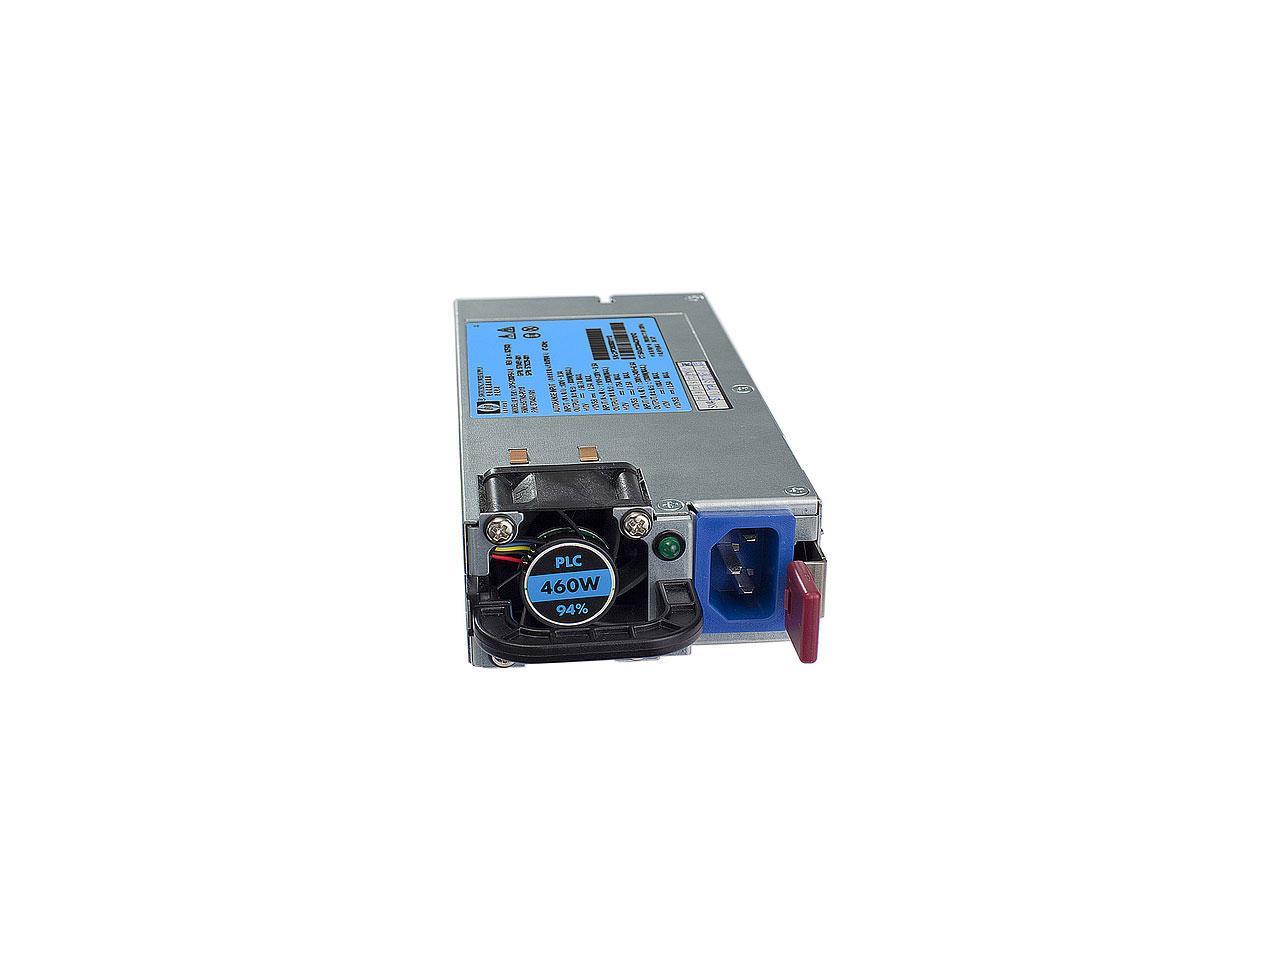 HP 503296-B21 others HE 12V Hot Plug AC Server Power Supply Kit